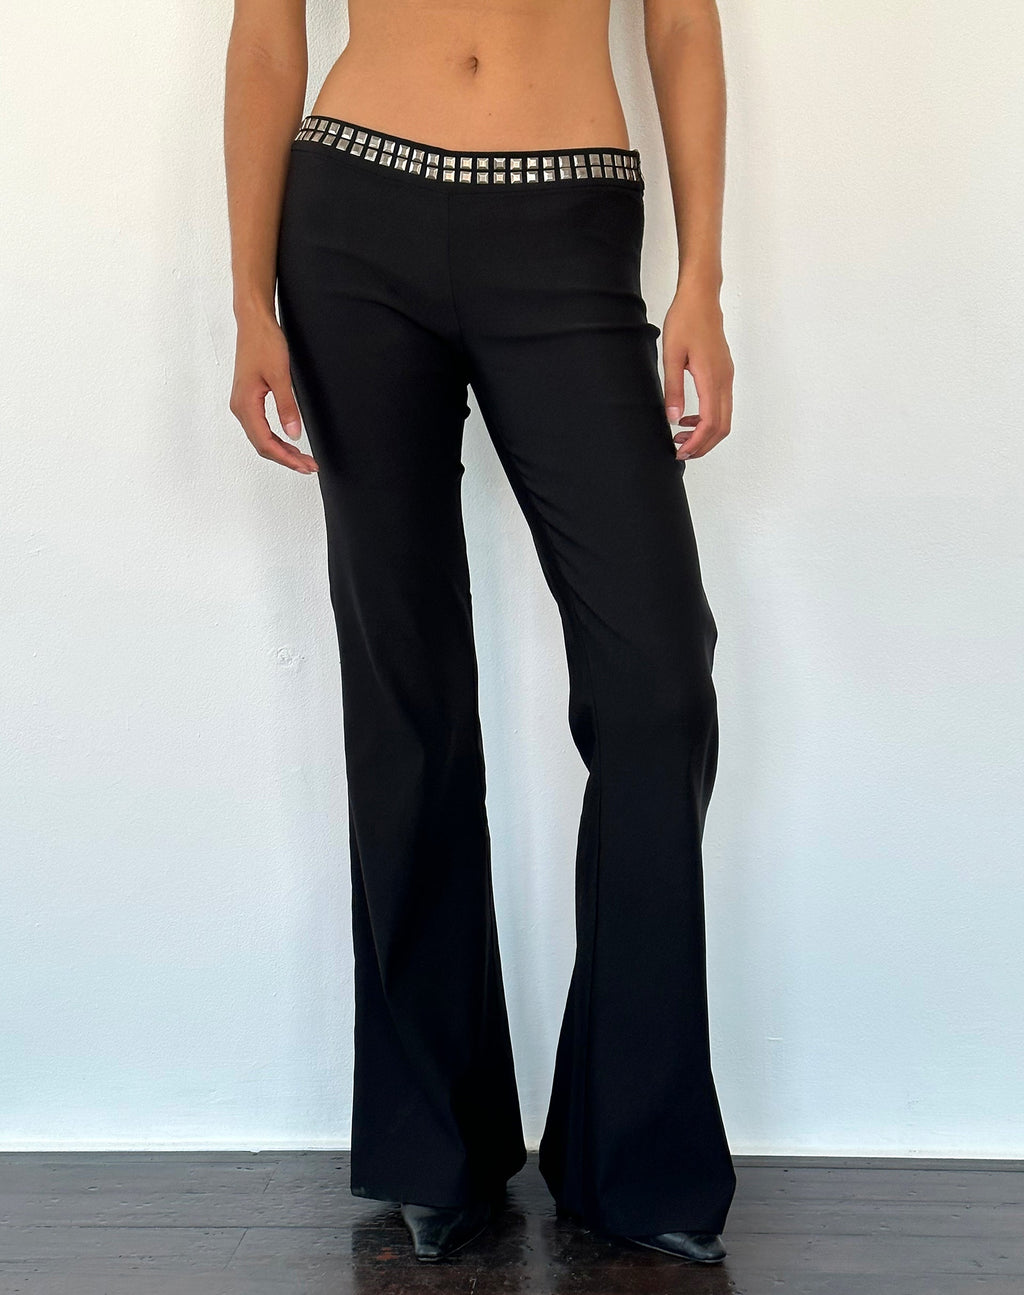 Macias Studded Flared pantalones en negro Sastrería